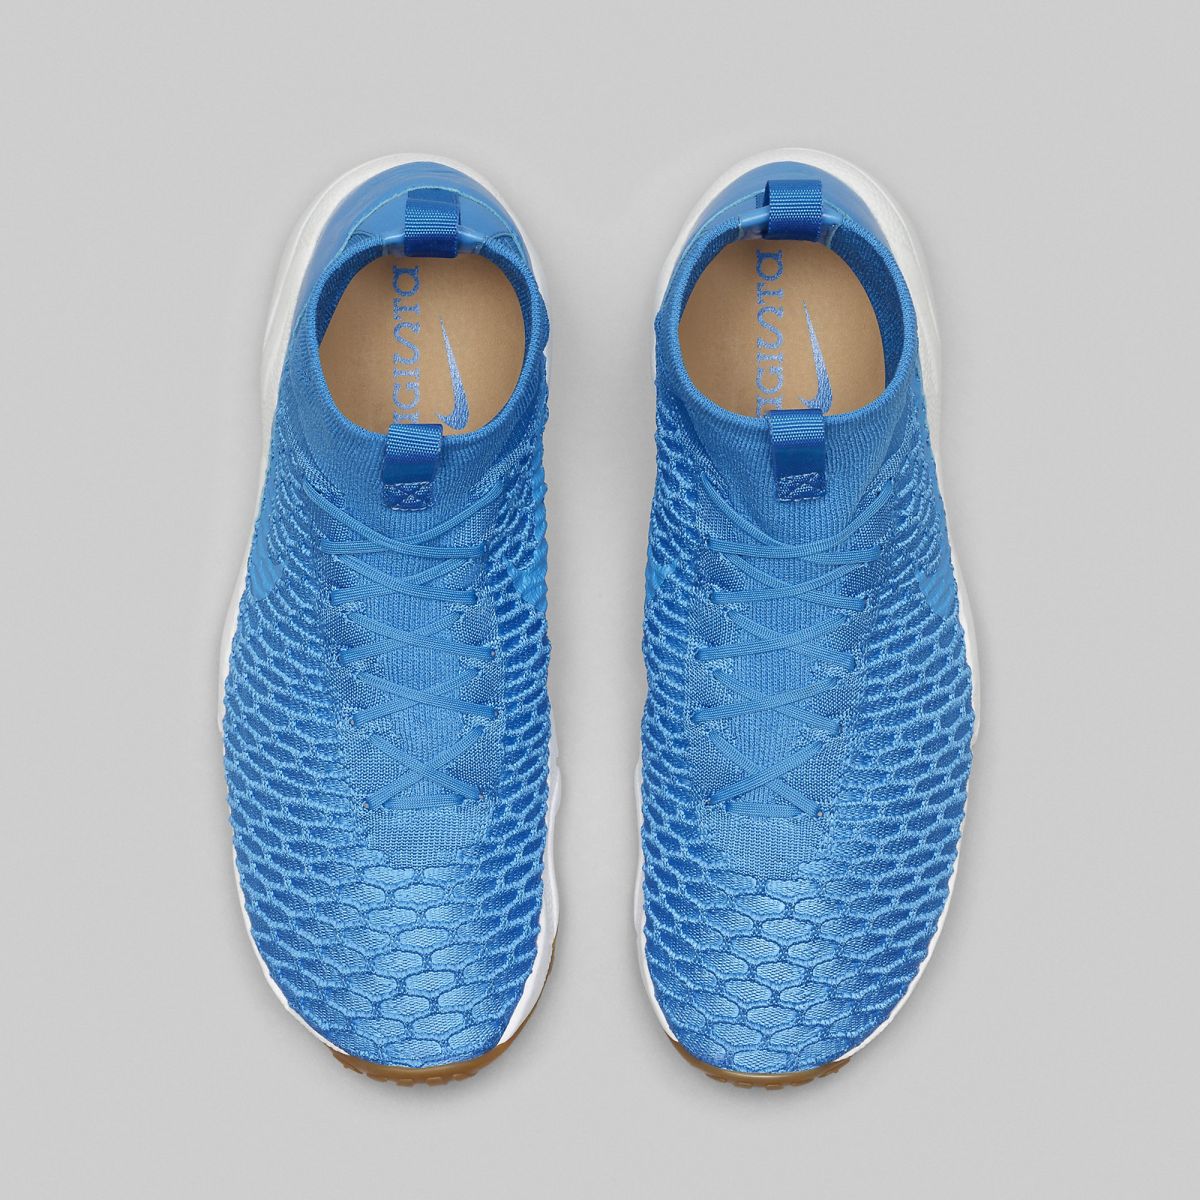 Nike Air Footscape Magista Bleu (5)